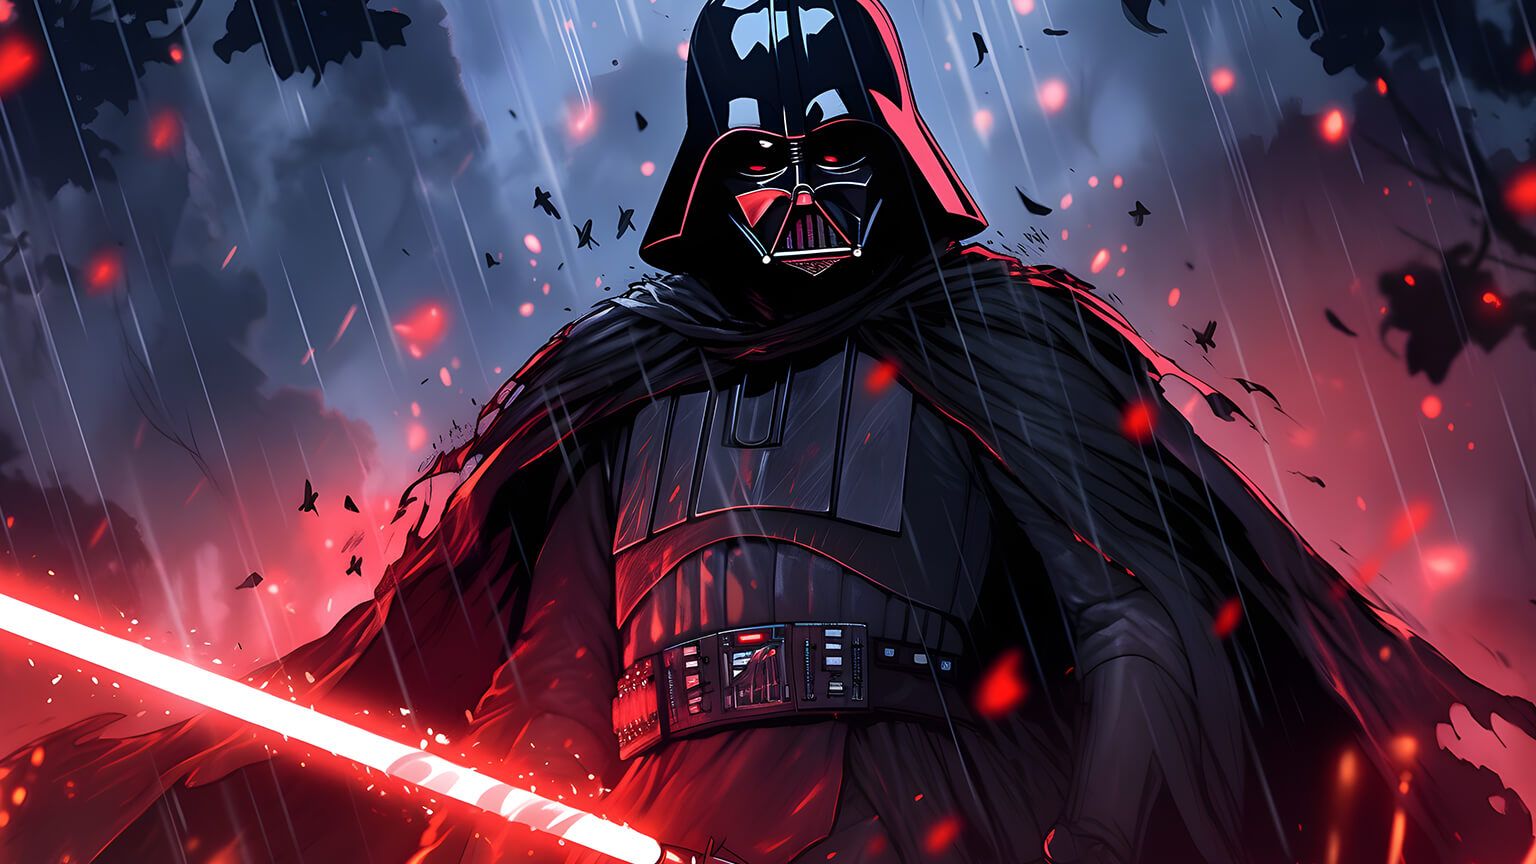 Darth Vader, Star Wars, The Force Awakens, 2015, movies, wallpaper, 2560x1440 wallpaper, 2560x1440 wallpaper - Darth Vader